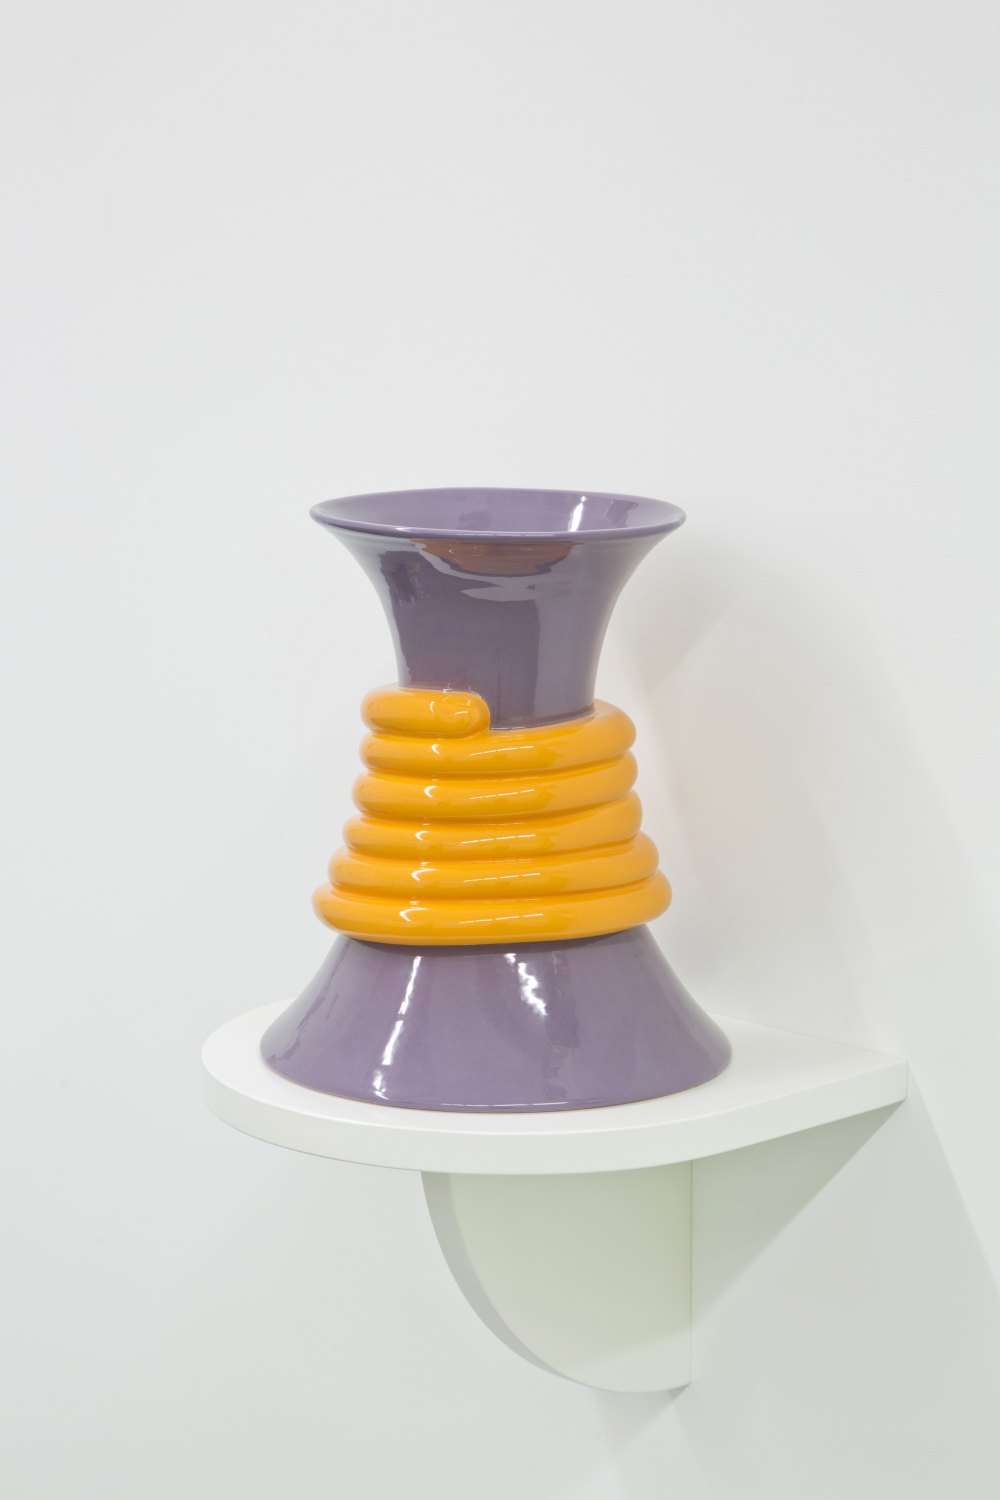 Marc Camille Chaimowicz Rope vase, 2014 Glazed ceramic, 30 cm × ∅ 23 cm 